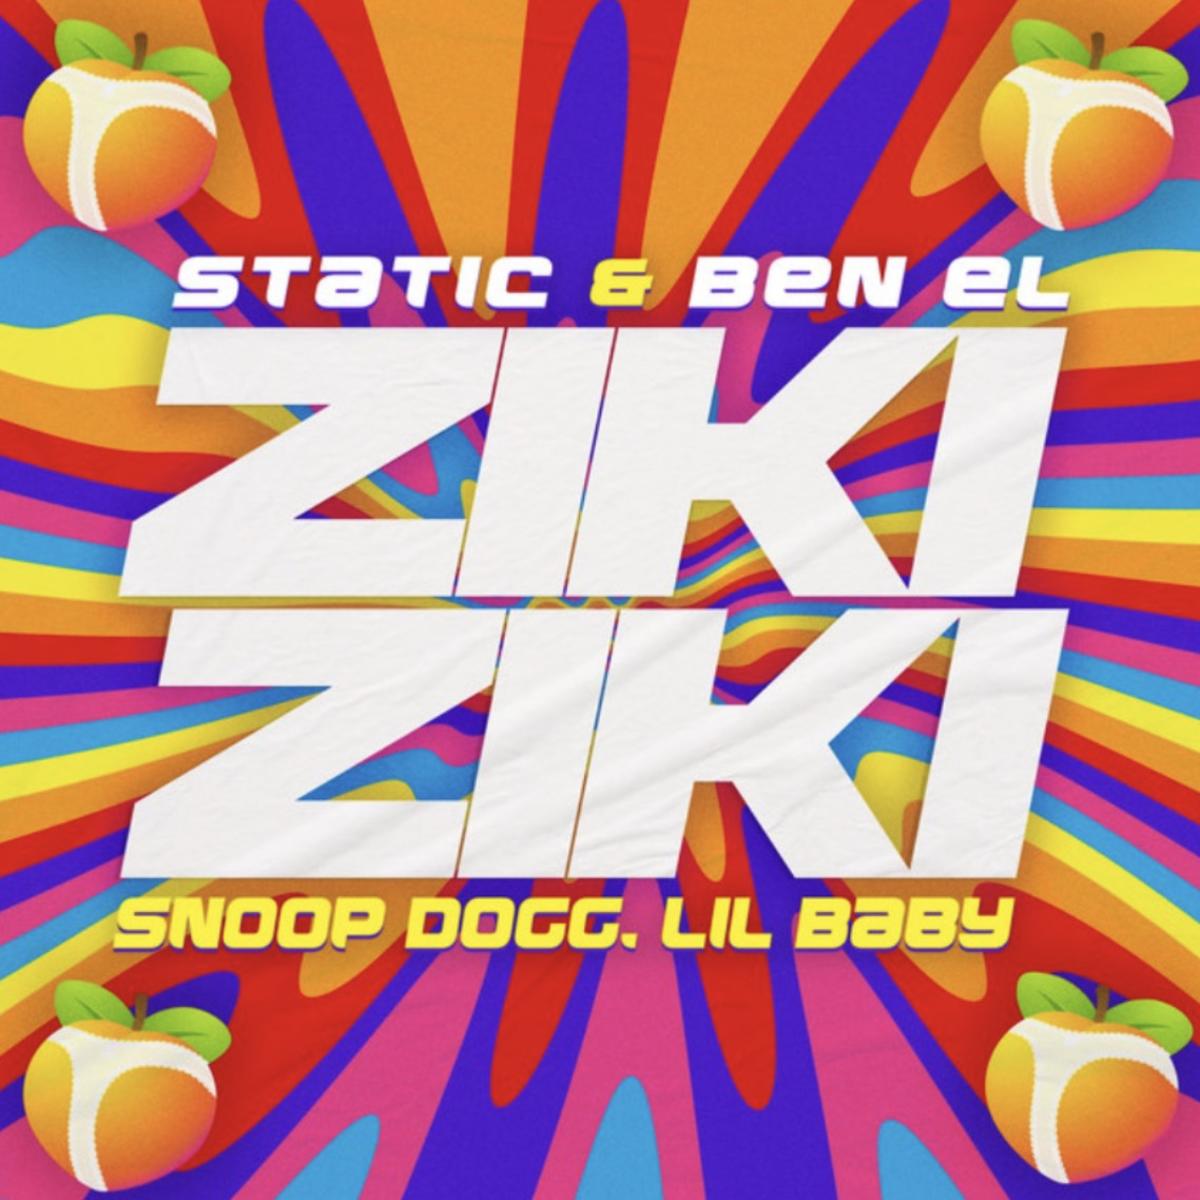 DJ Static & Ben El Call On Lil Baby & Snoop Dogg For “Ziki Ziki”